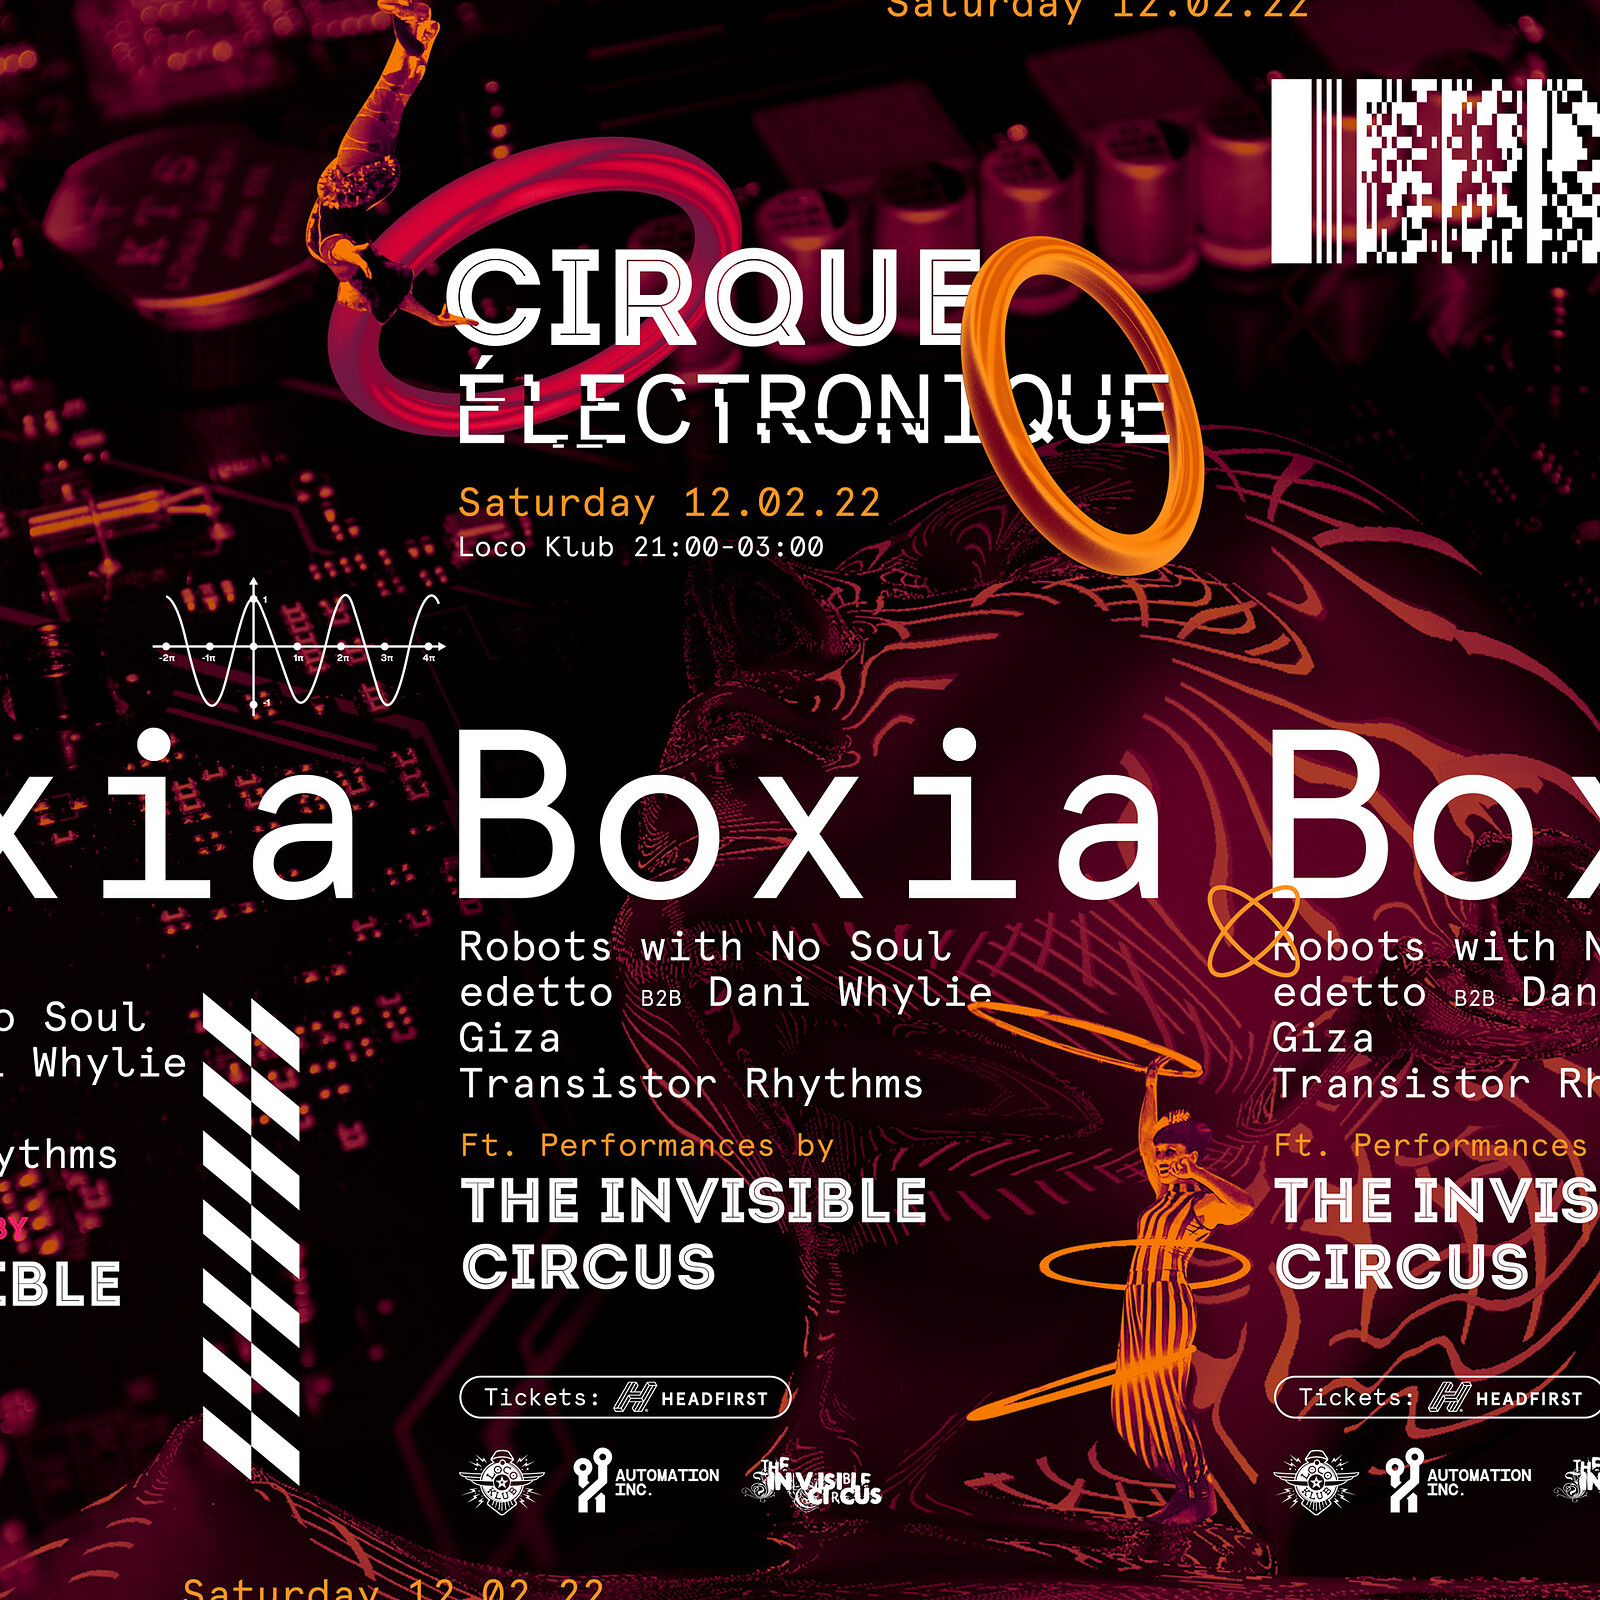 Cirque Électronique w/ Boxia at The Loco Klub